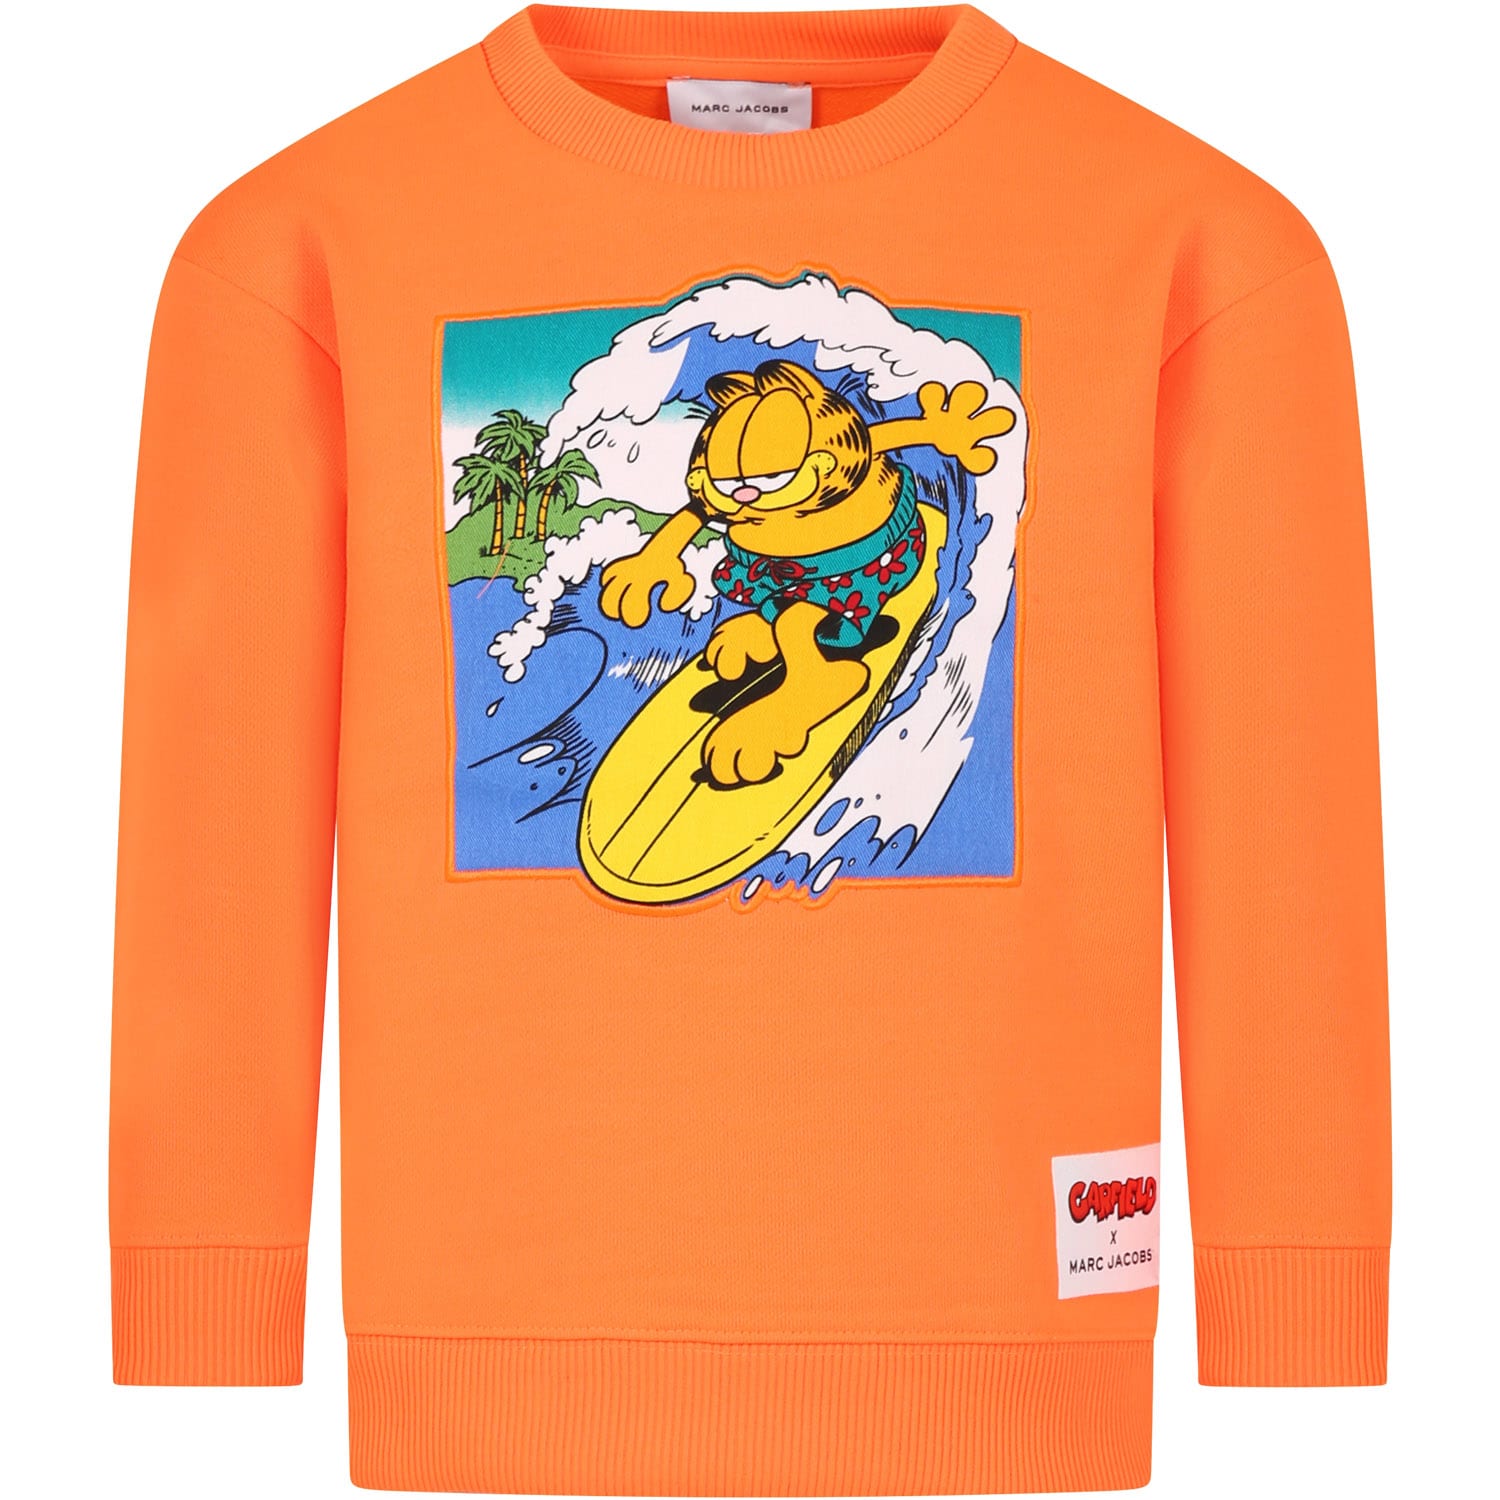 Marc Jacobs Orange Sweatshirt For Boy With Garfield